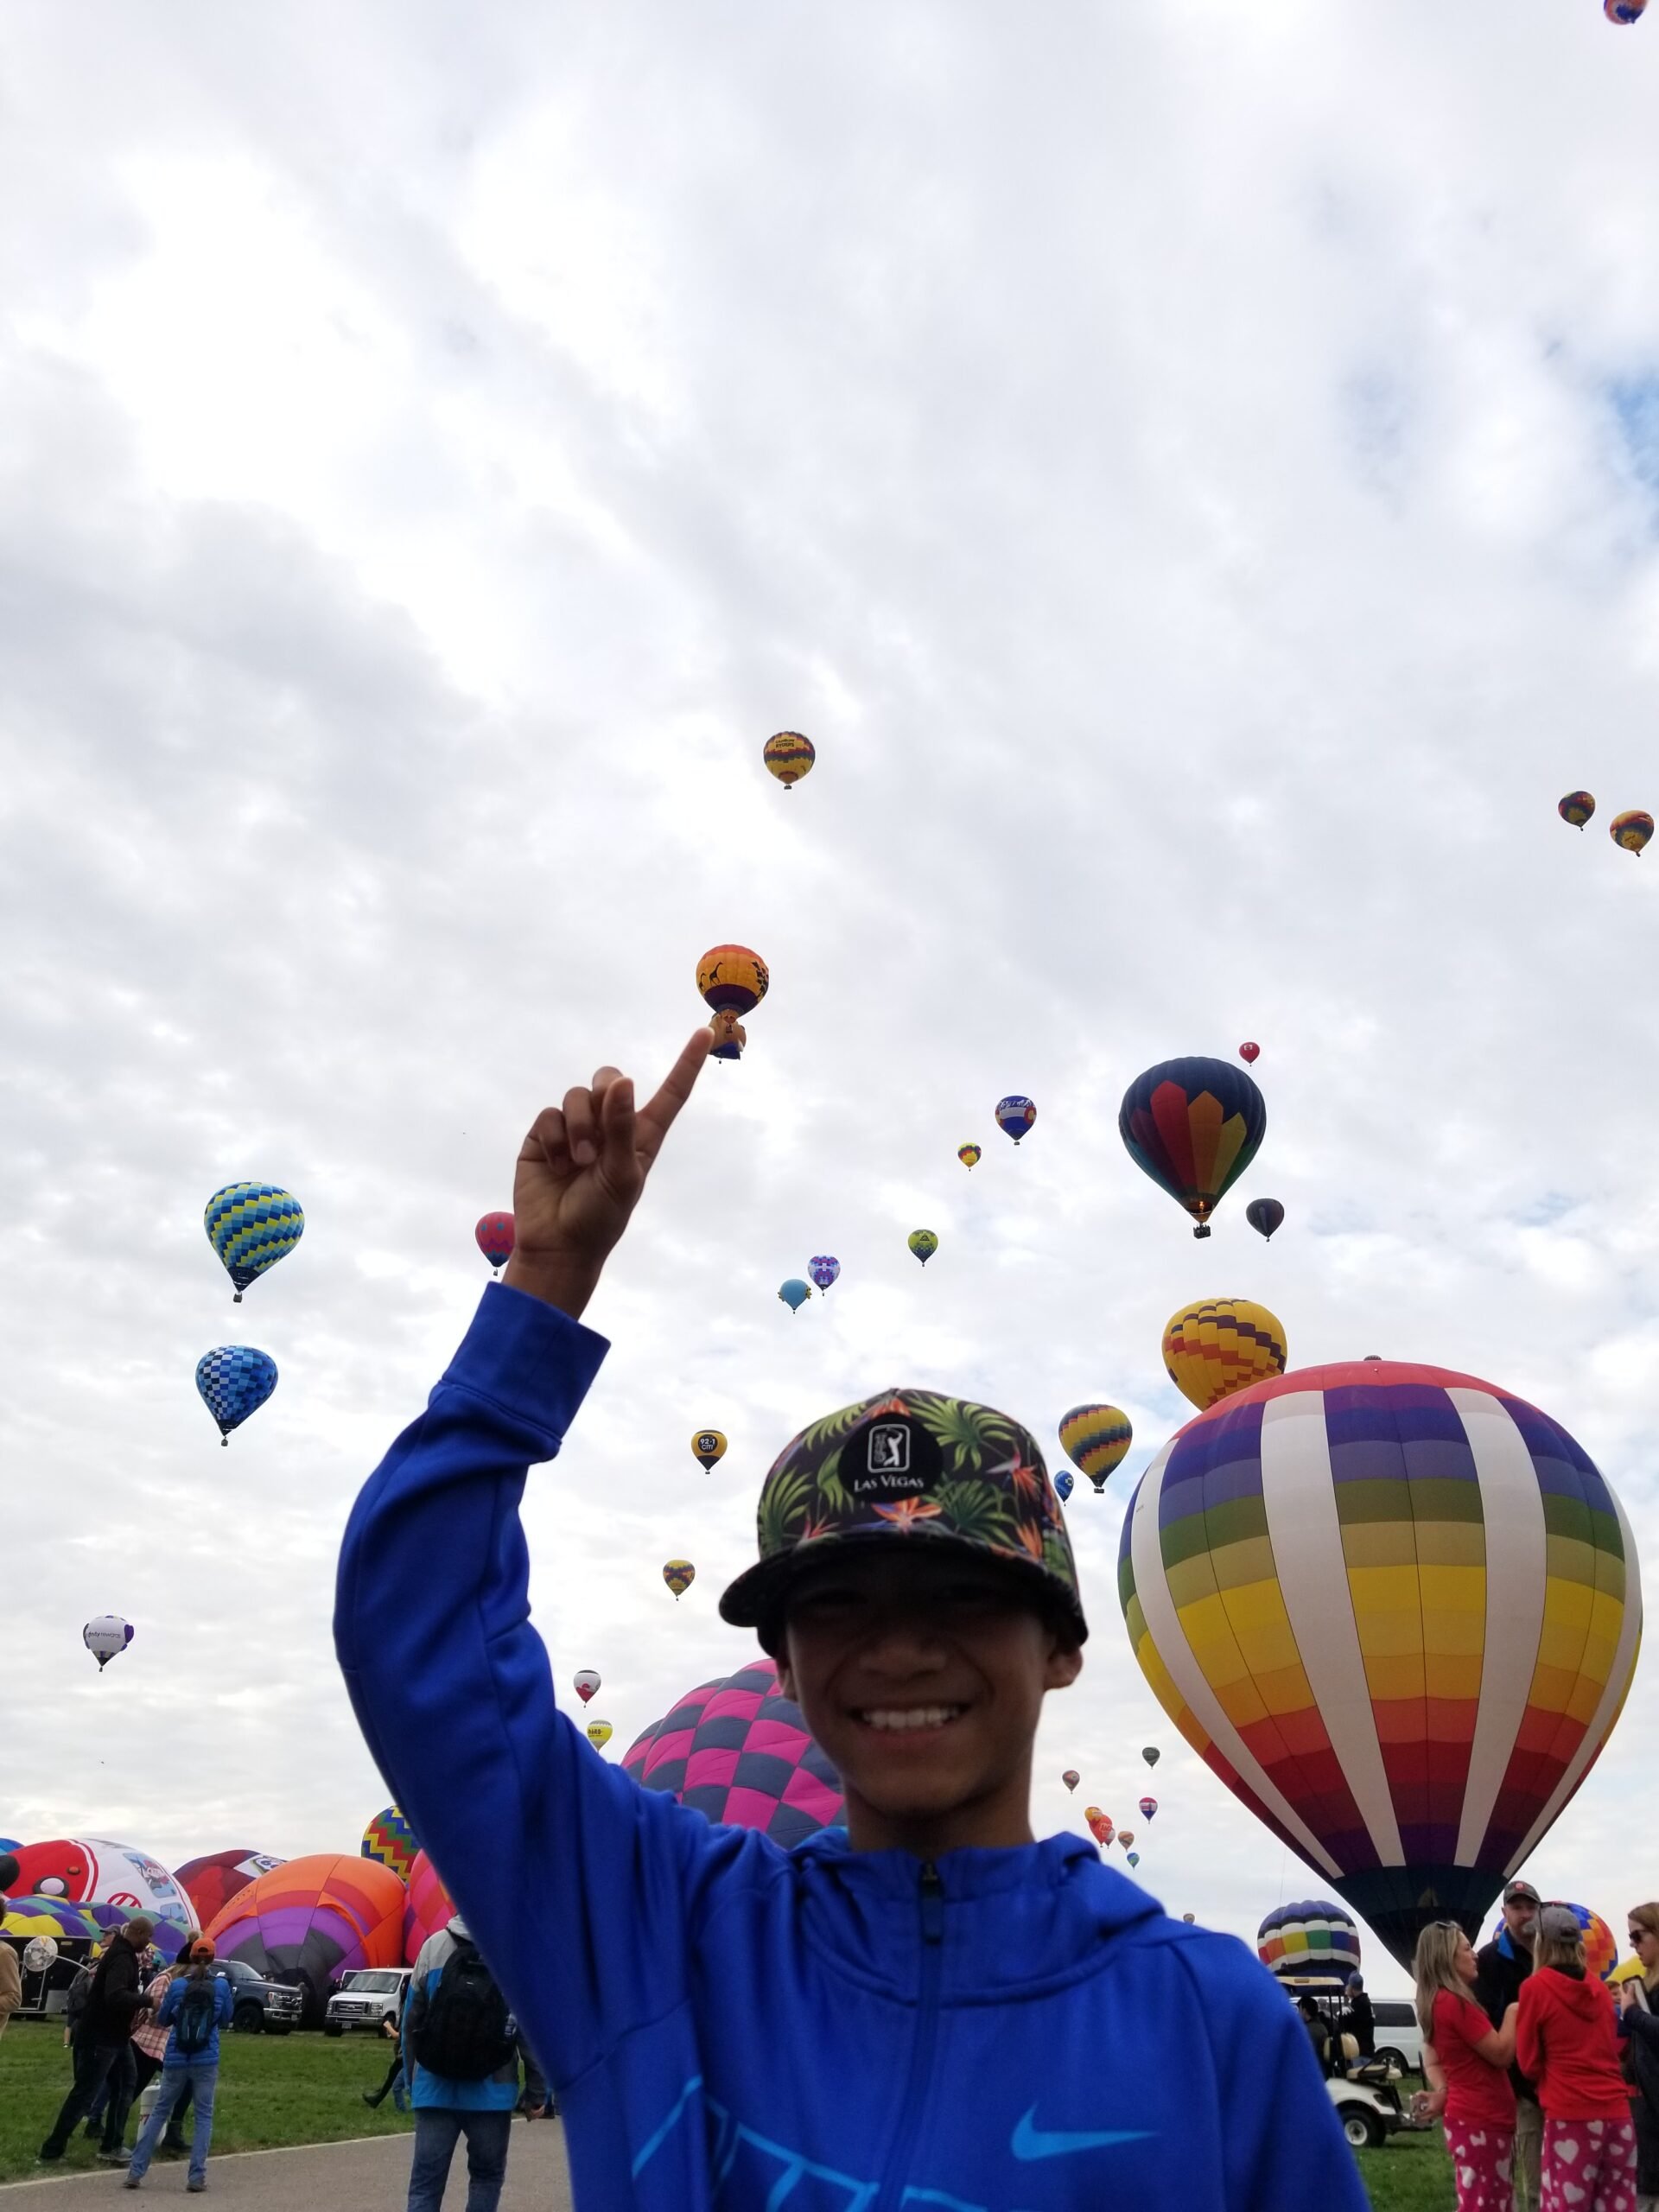 Youth on Course member Jaden Nacional at the 50th anniversary of Ballon Fiesta in Albuquerque, NM